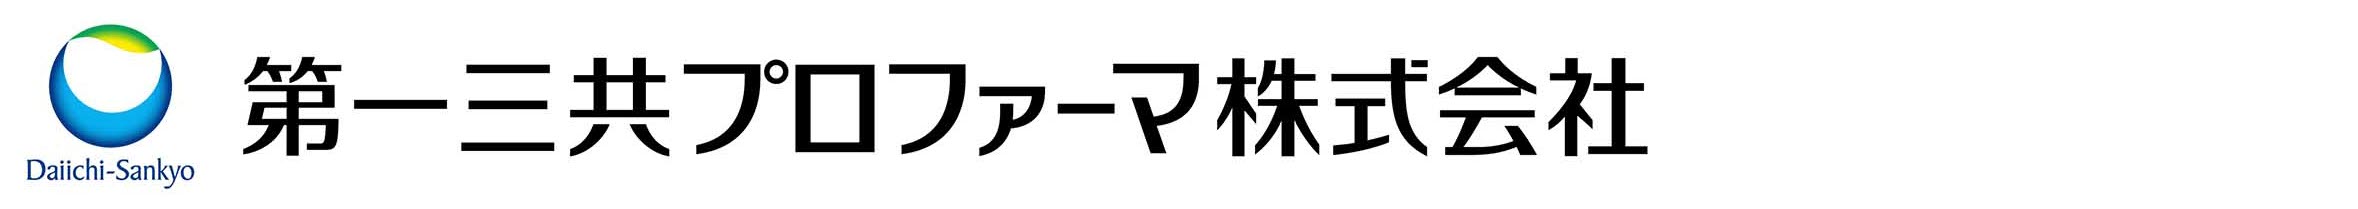 Daiichi Sankyo Propharma logo